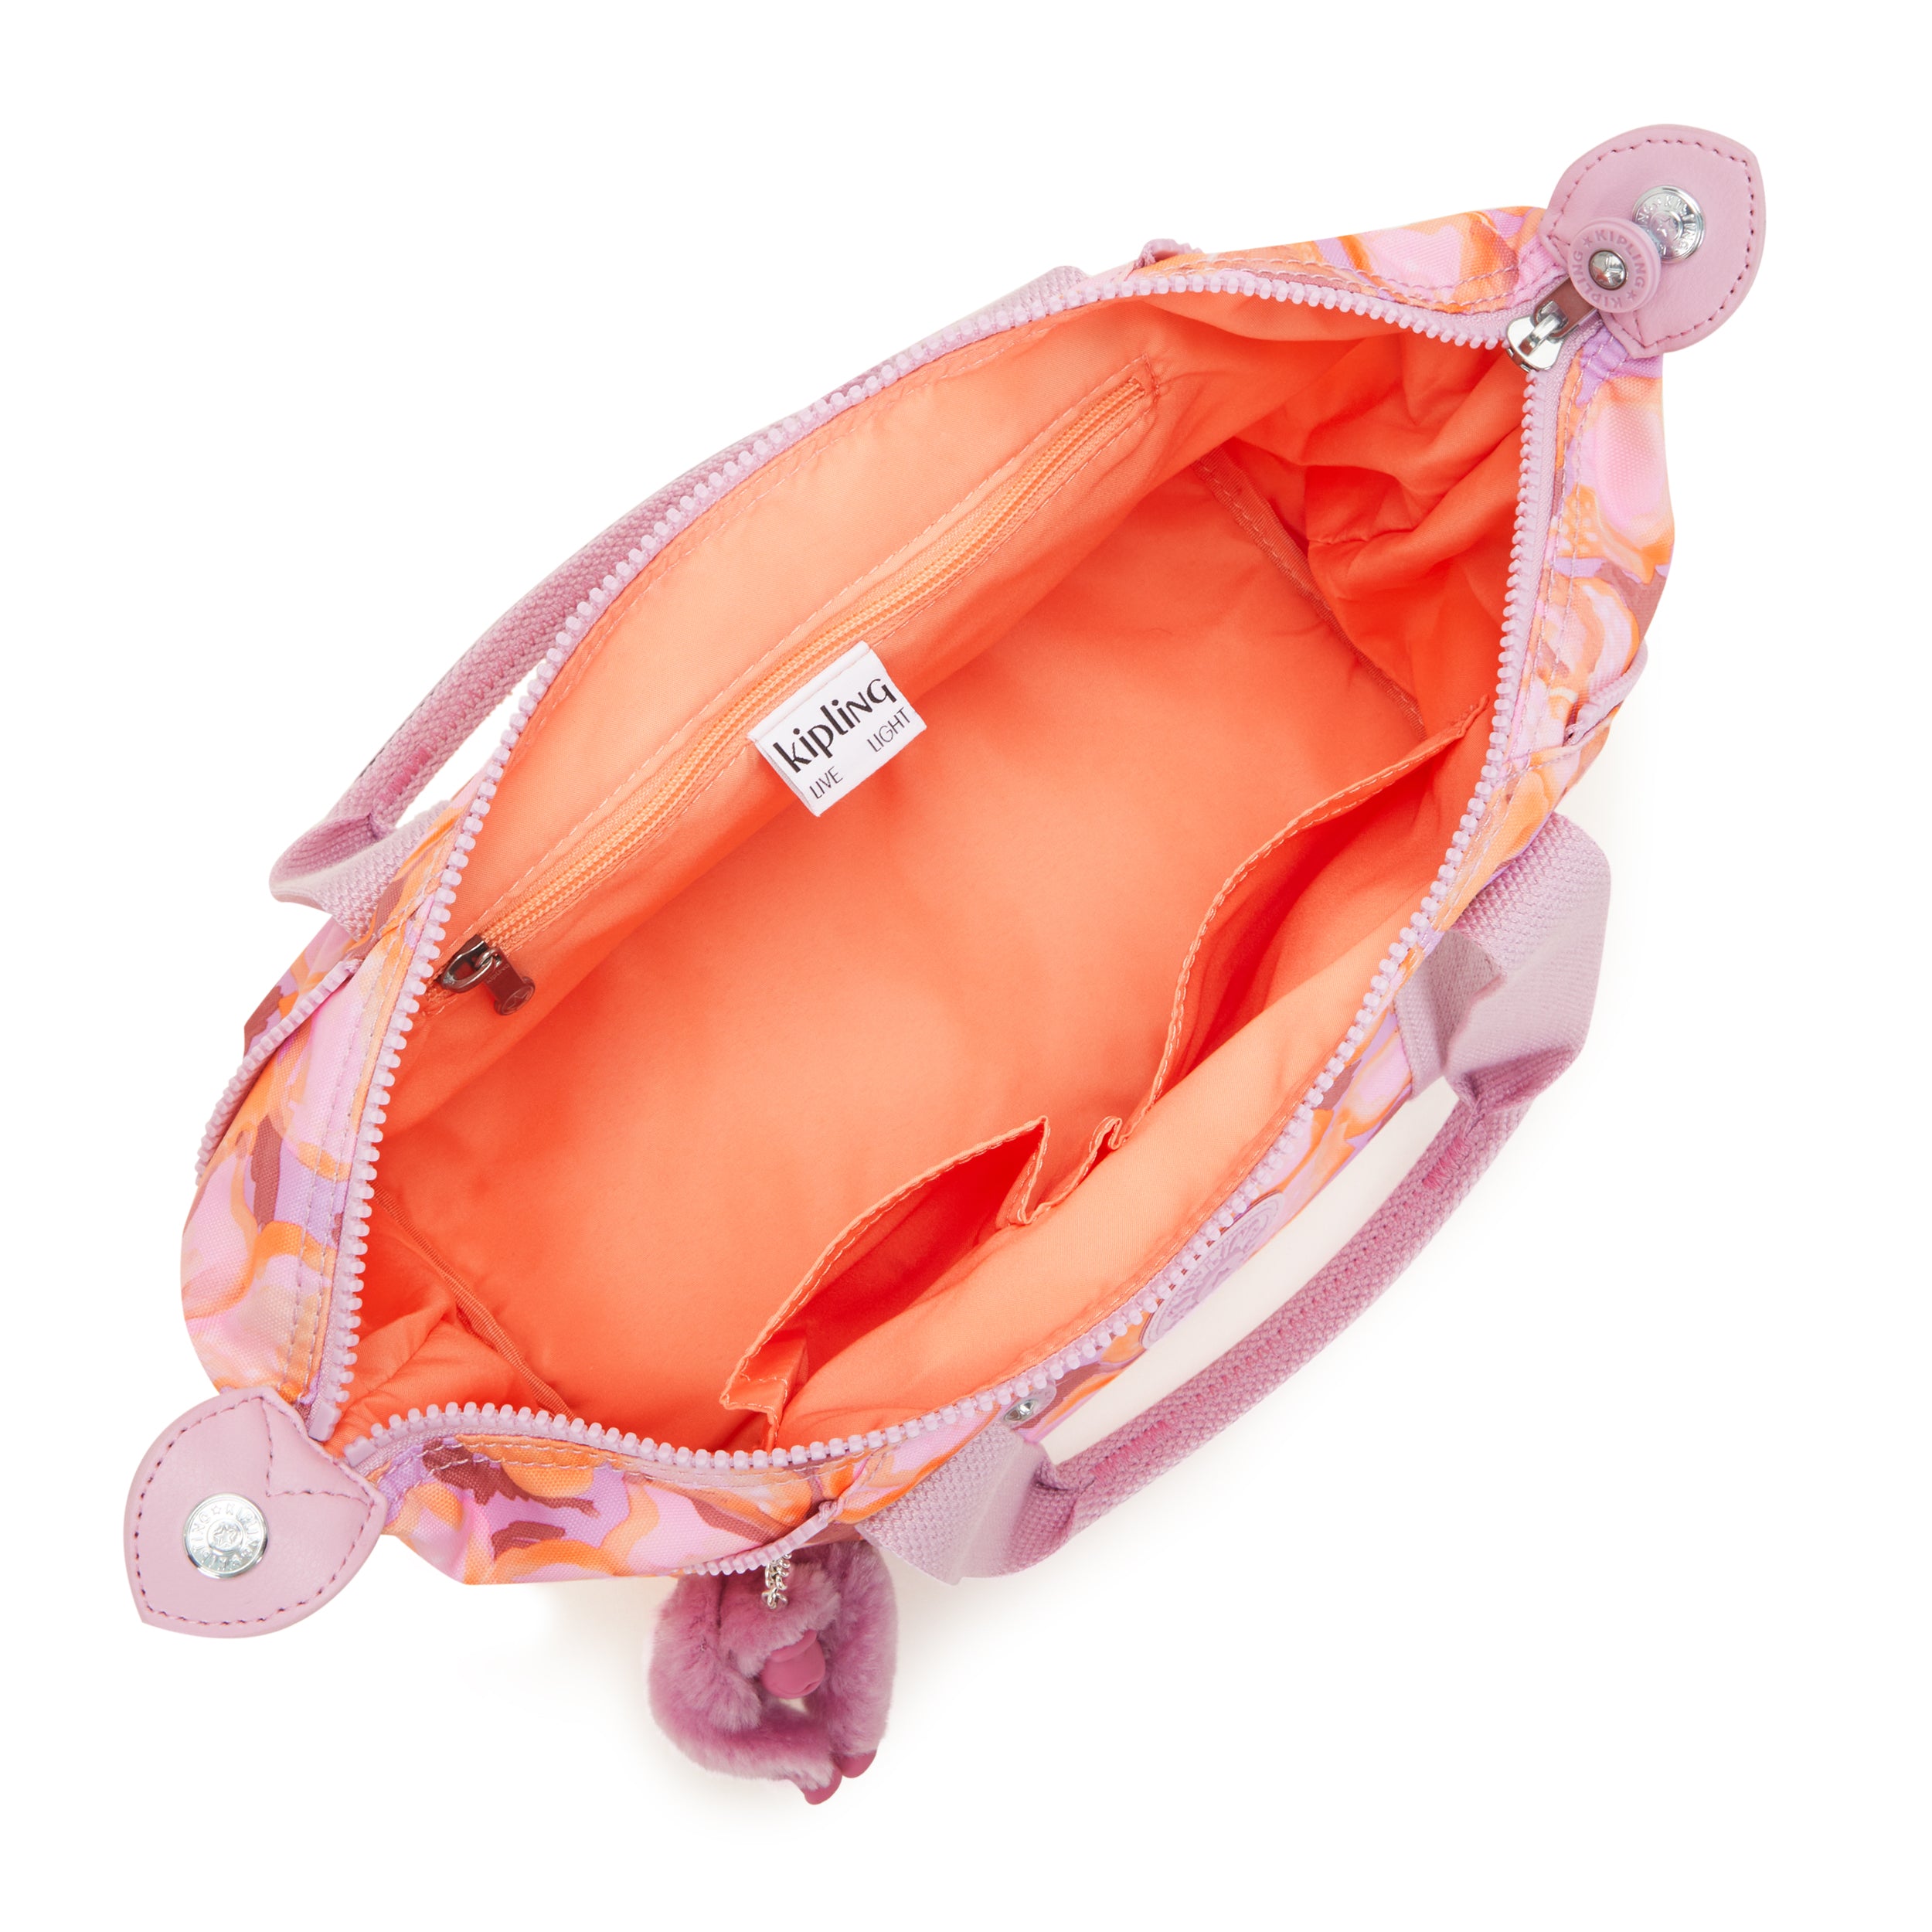 KIPLING-Art Mini-Small handbag (with removable shoulderstrap)-Floral Powder-I5656-ES4